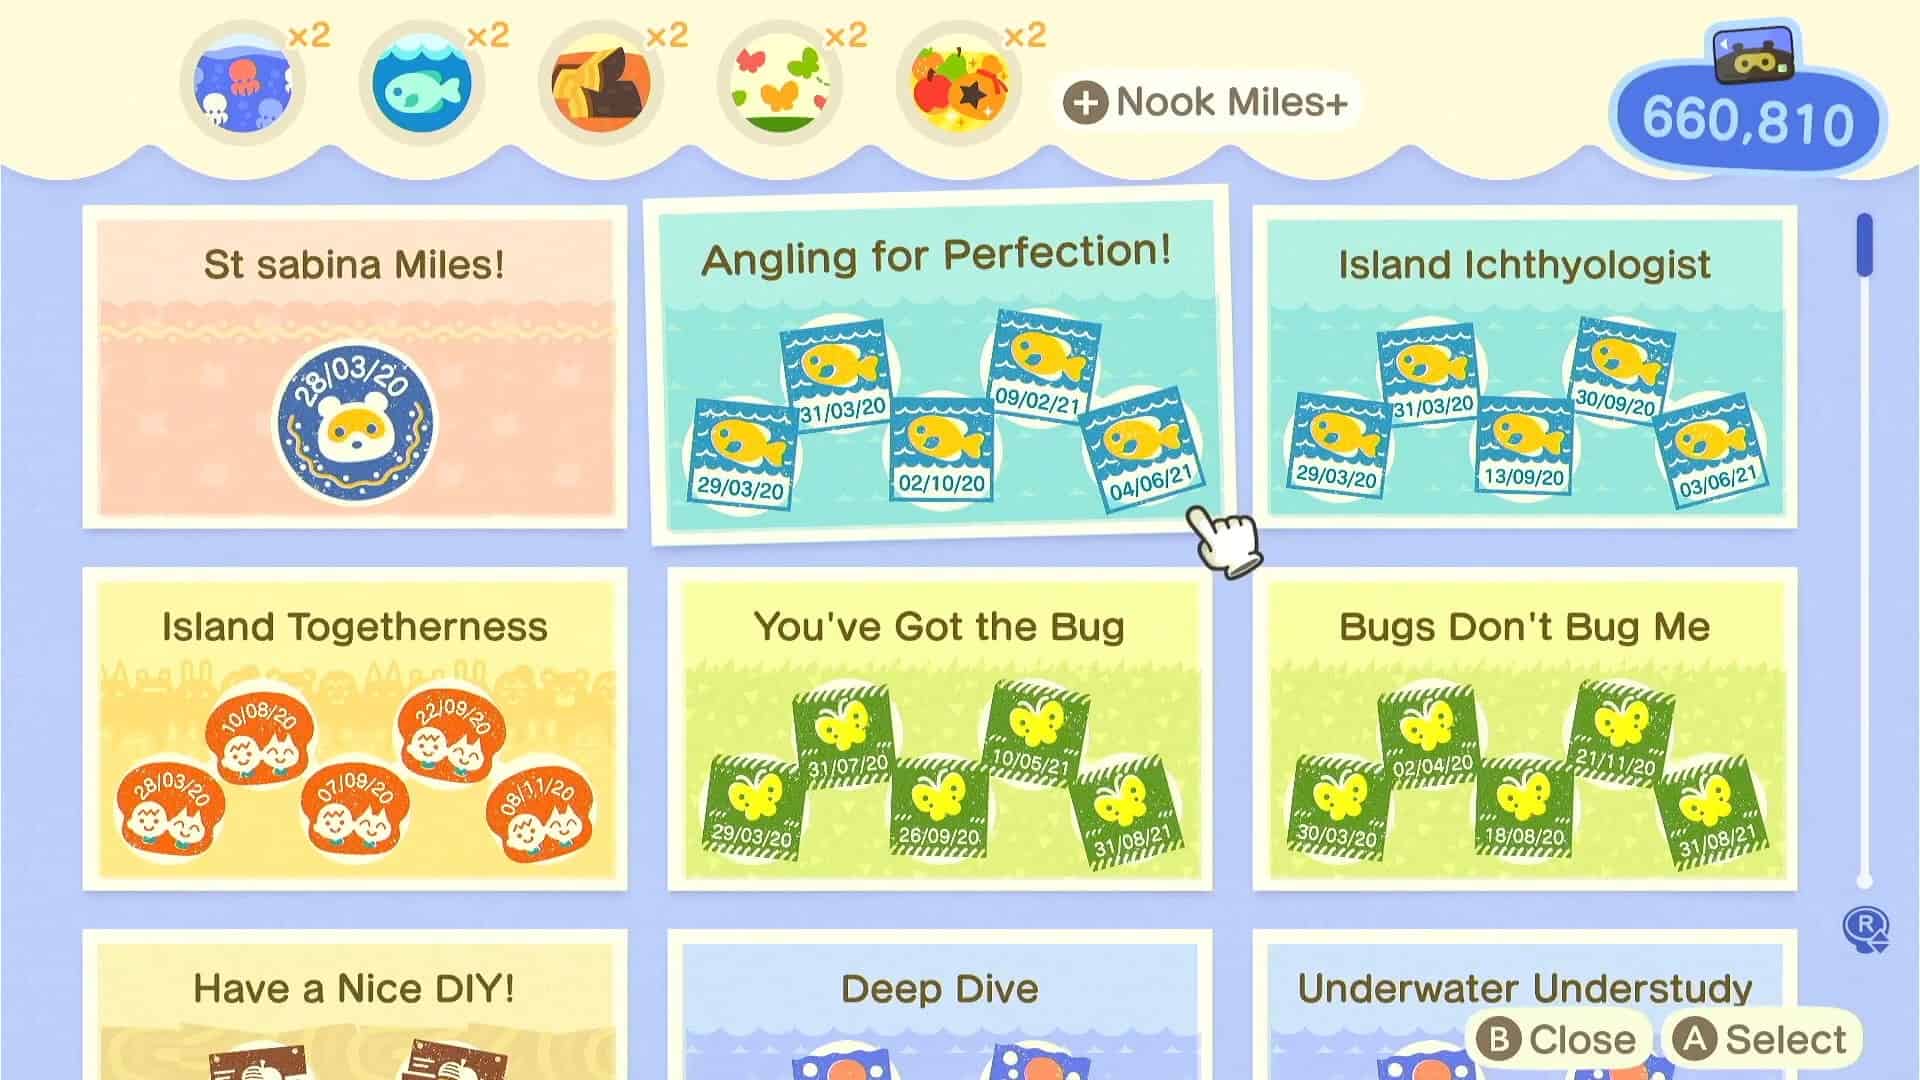 Nook Miles achievements in Animal Crossing New Horizons